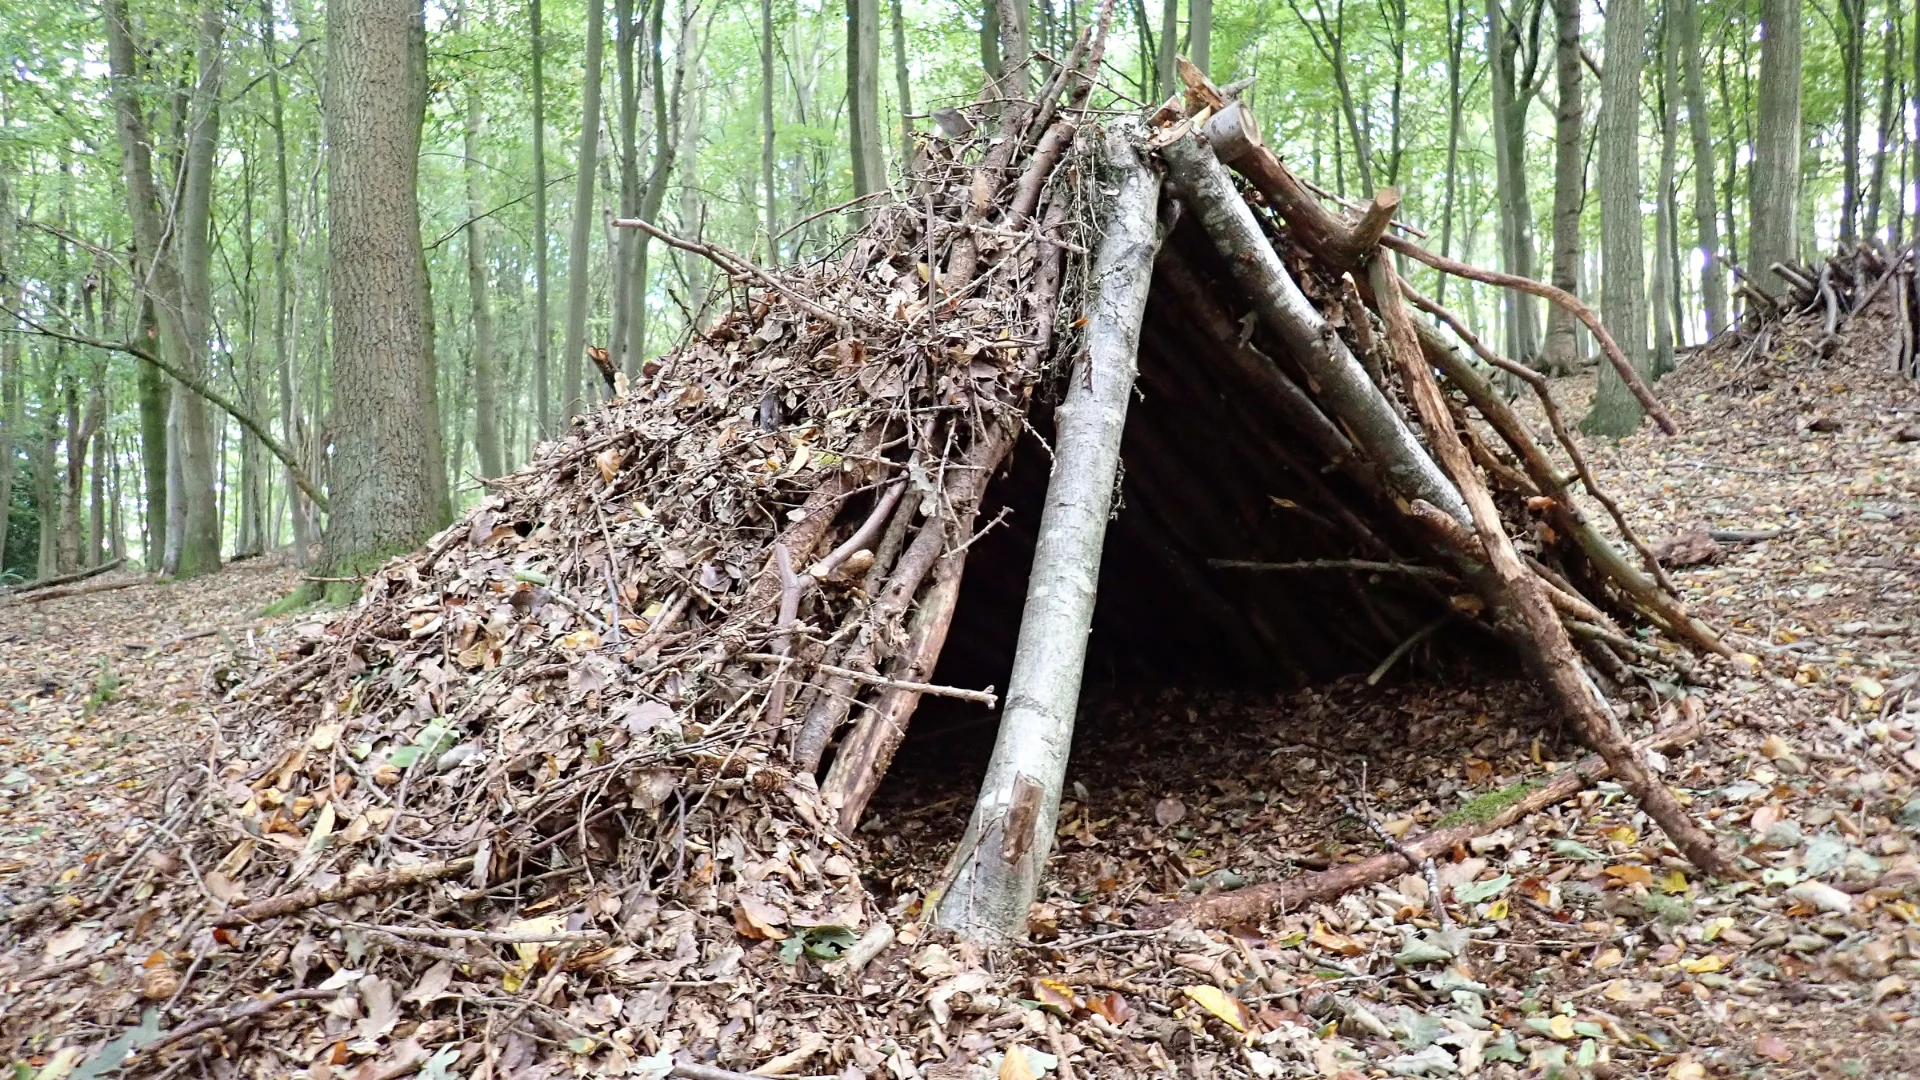 Survival shelter in forest 